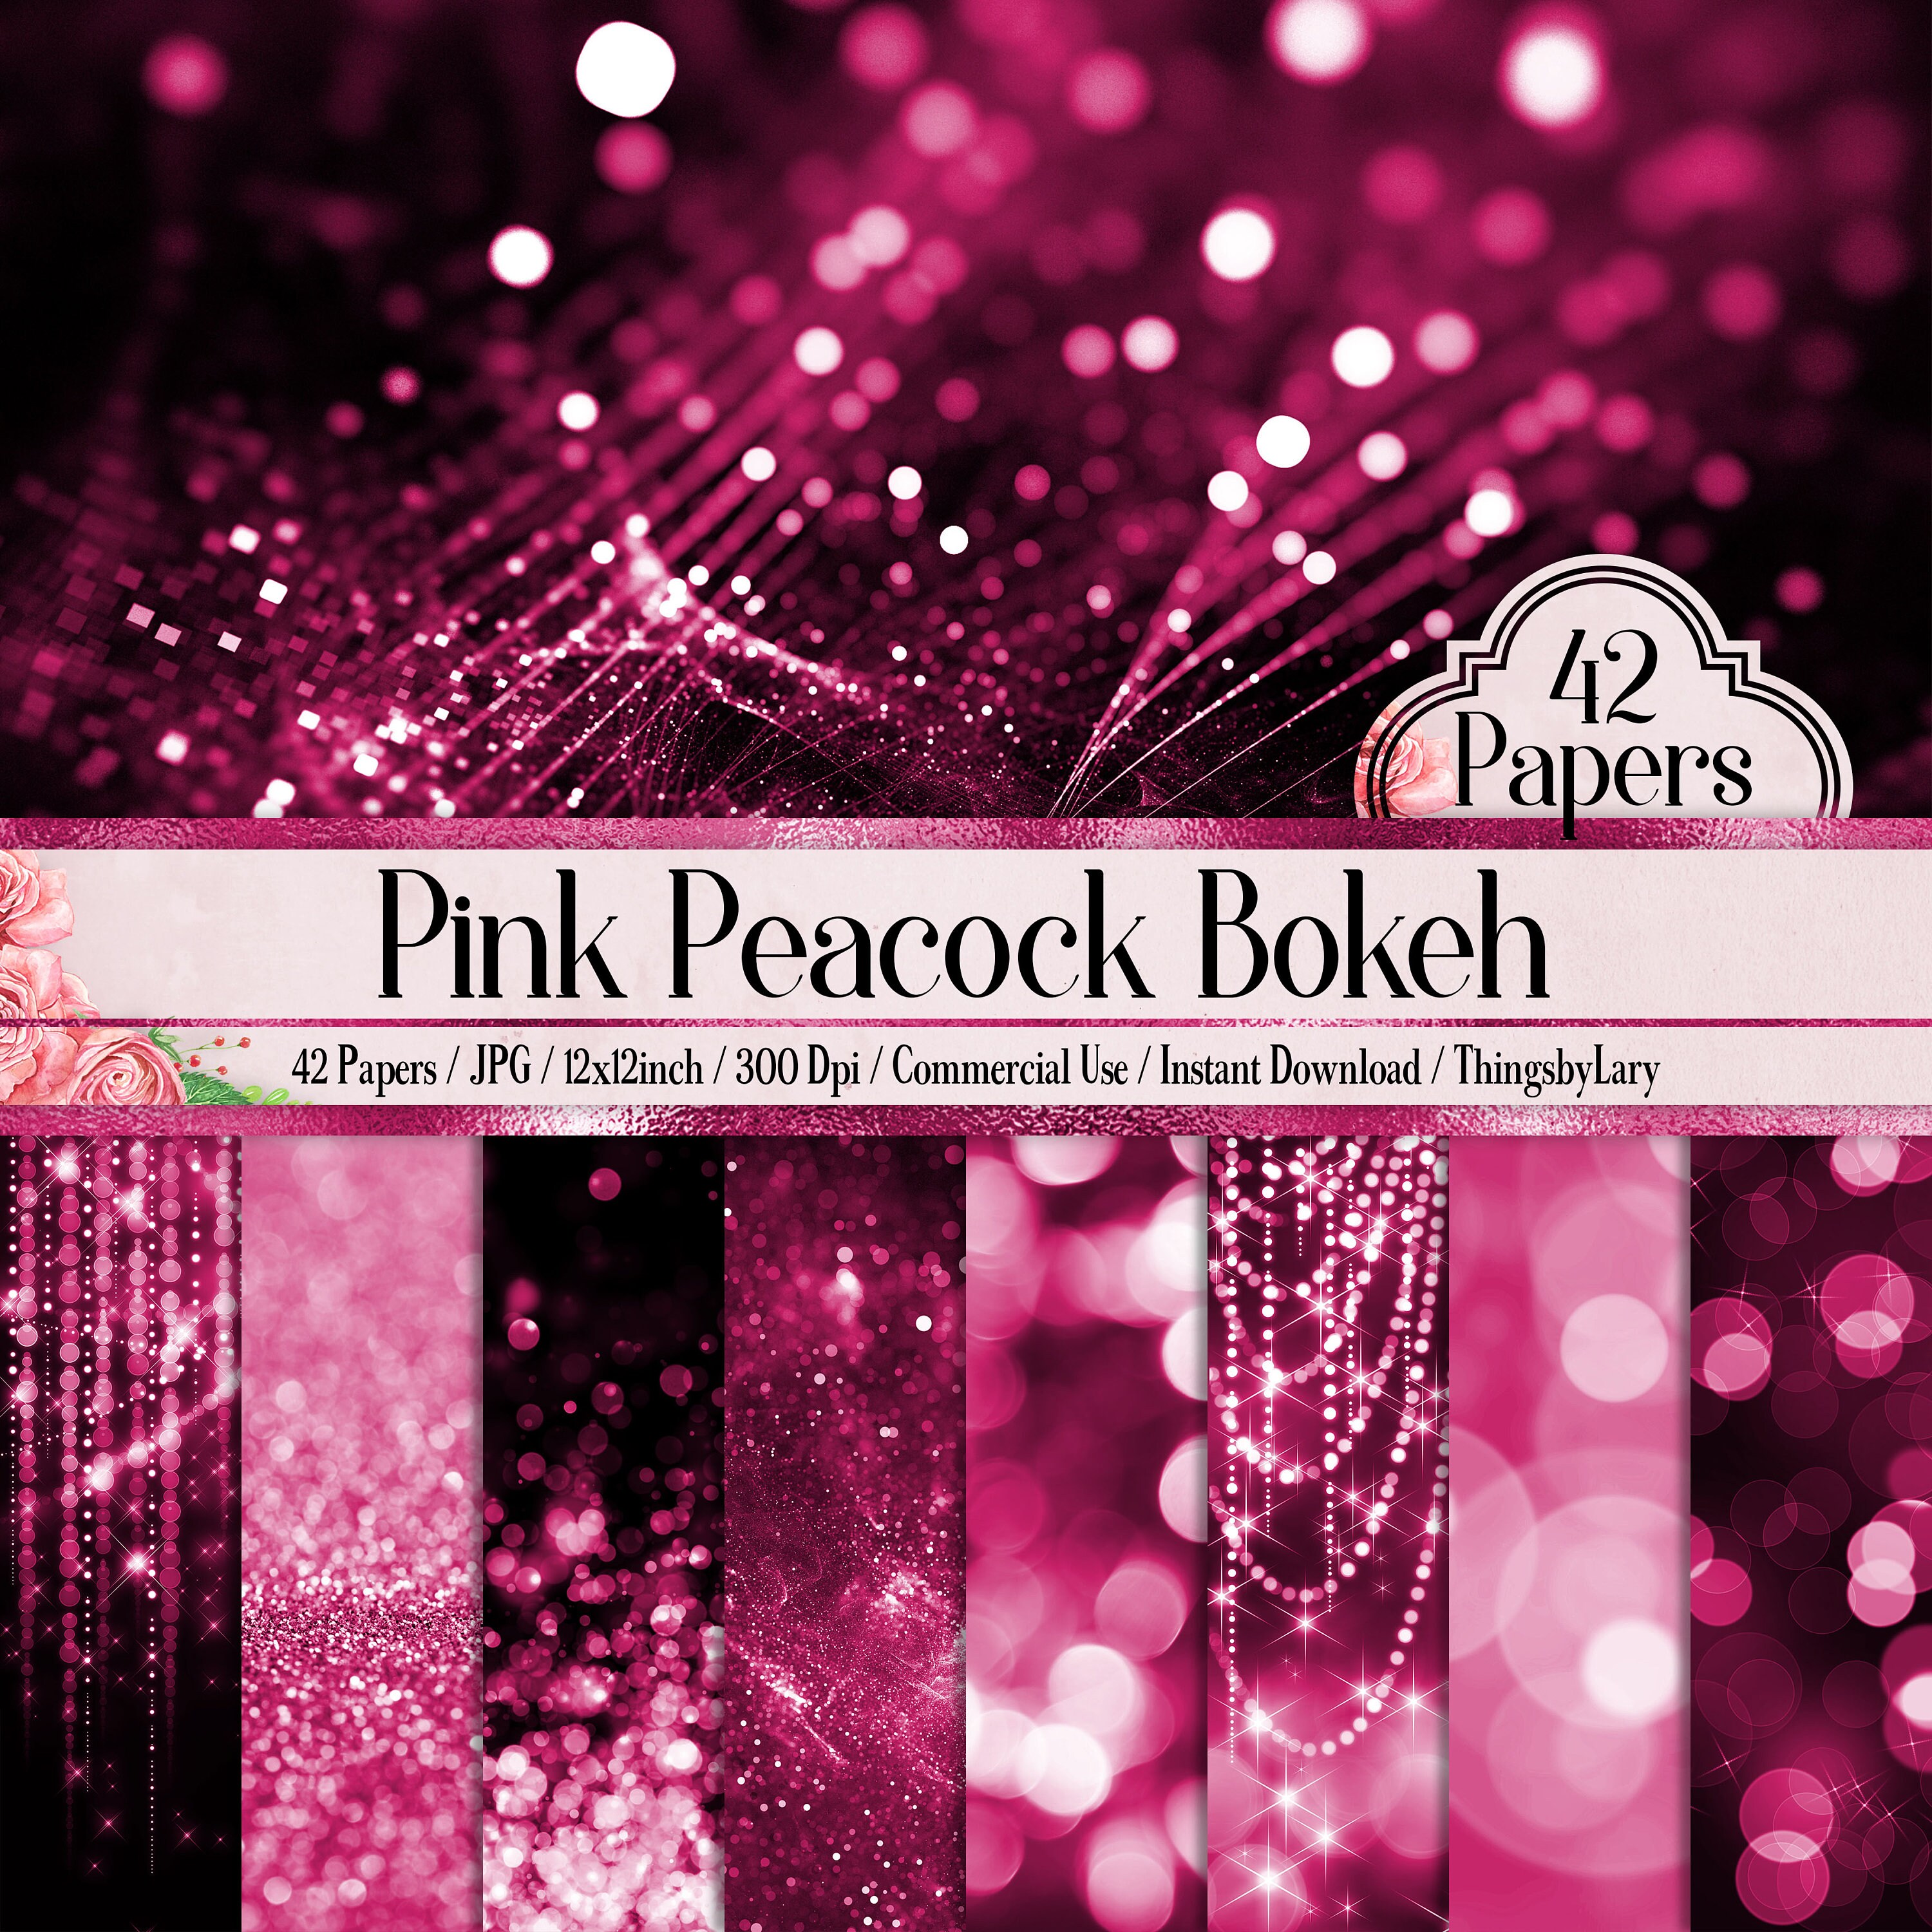 Light Pink Glitter Card Stock Pink, 12x12, Glitter Paper, Glitter